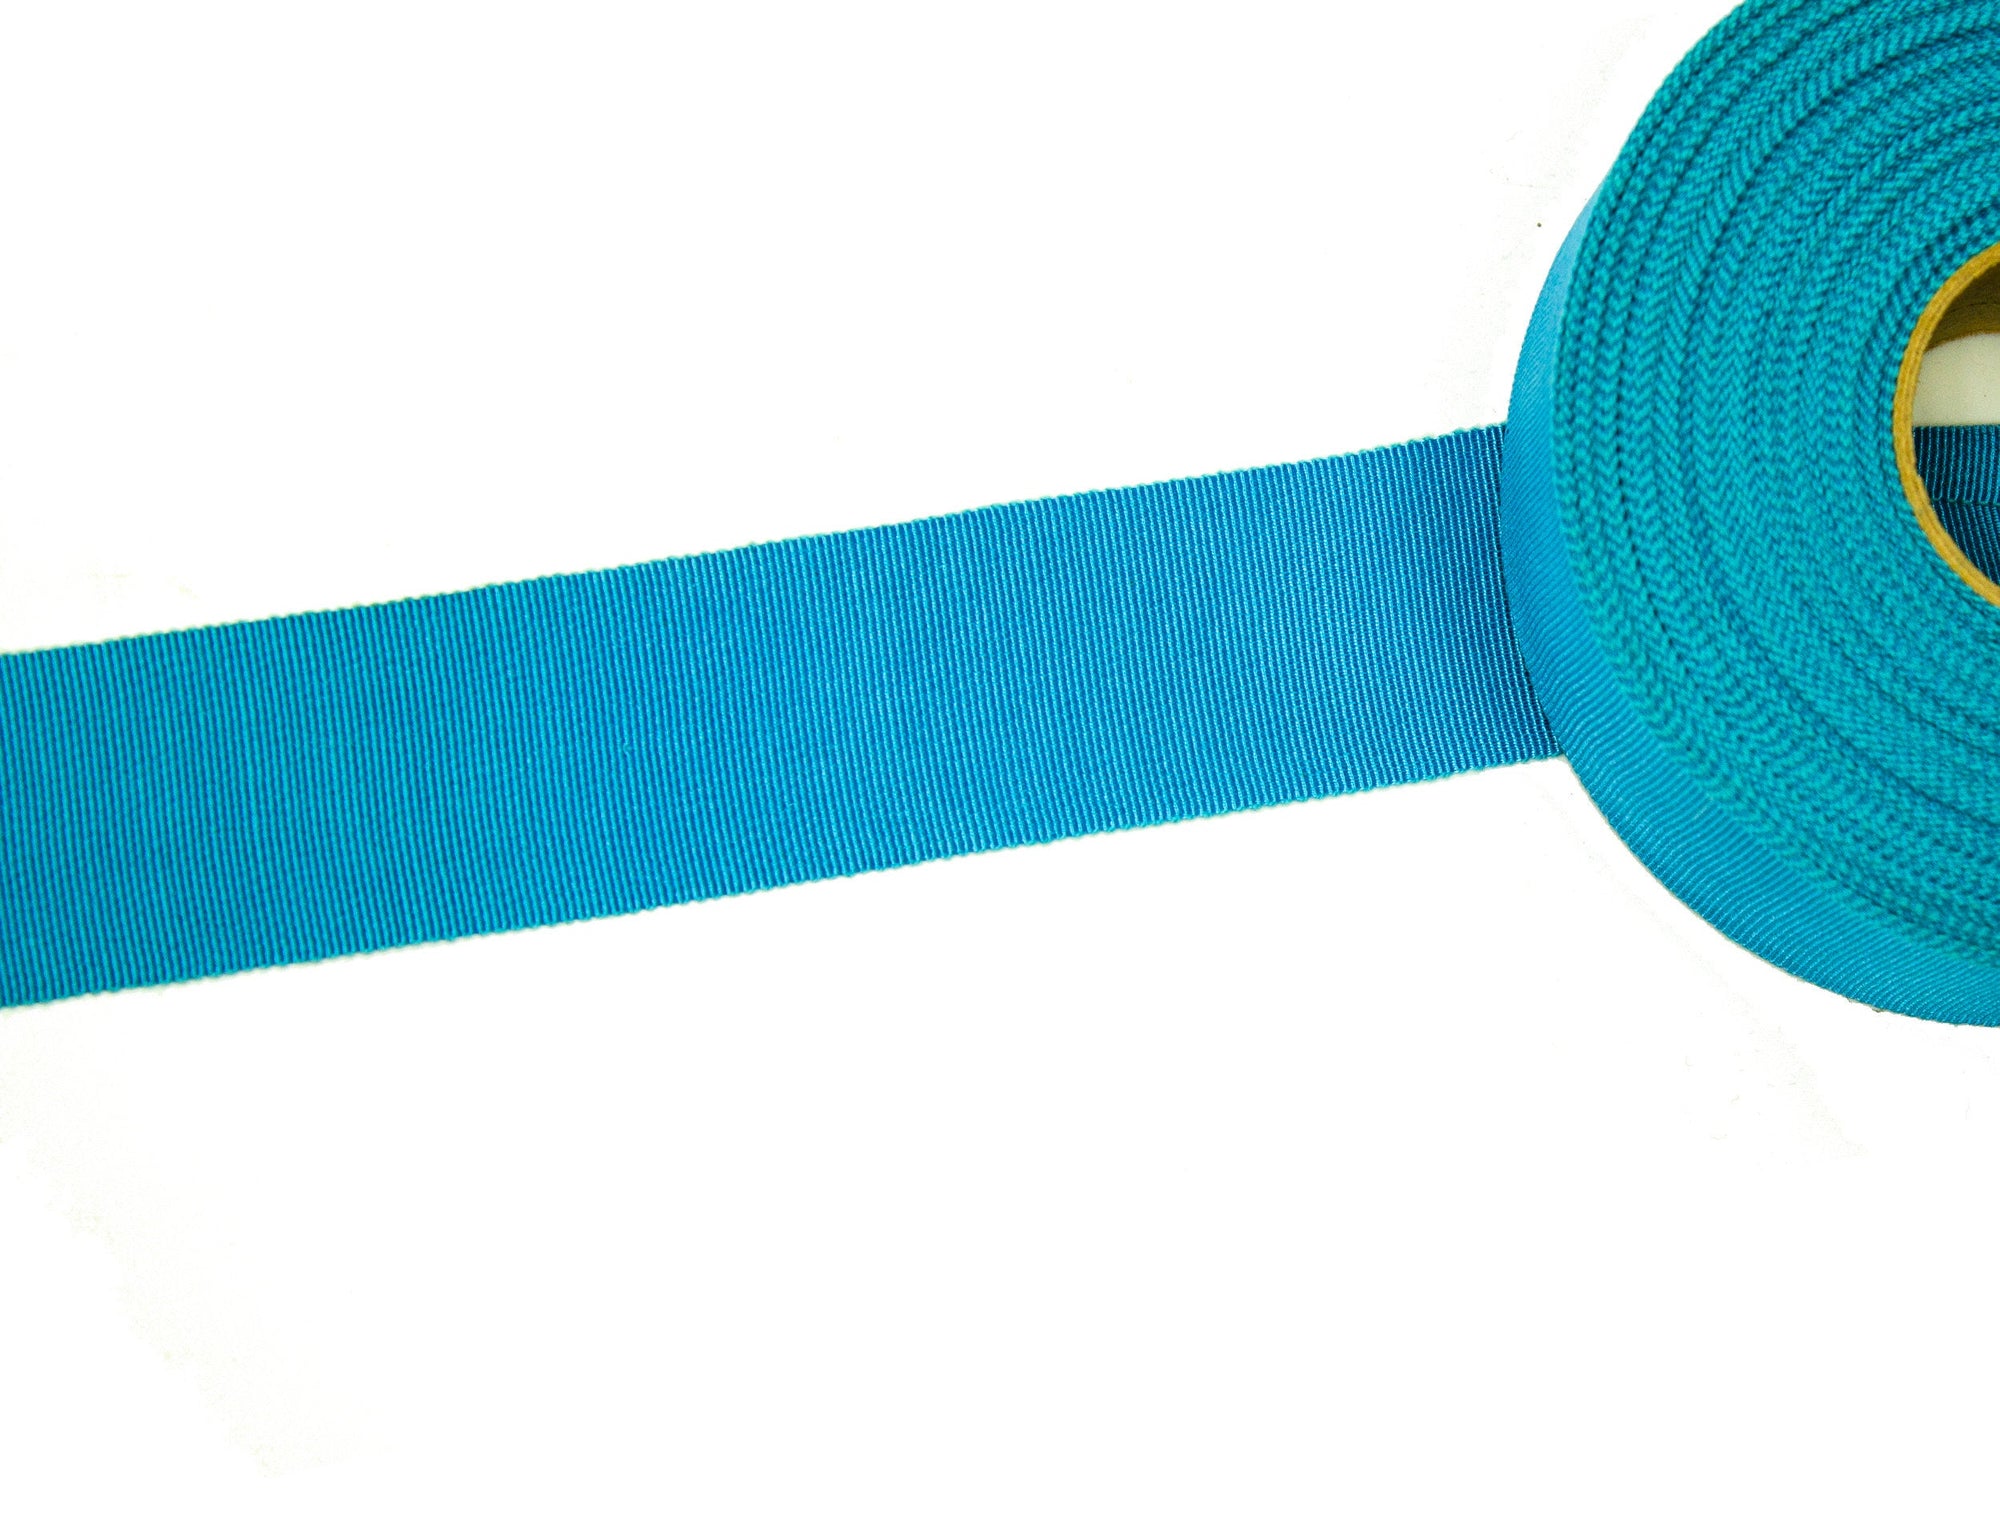 Vintage Petersham Ribbon Aqua Blue Measures 37 mm Wide - Sold by the Yard